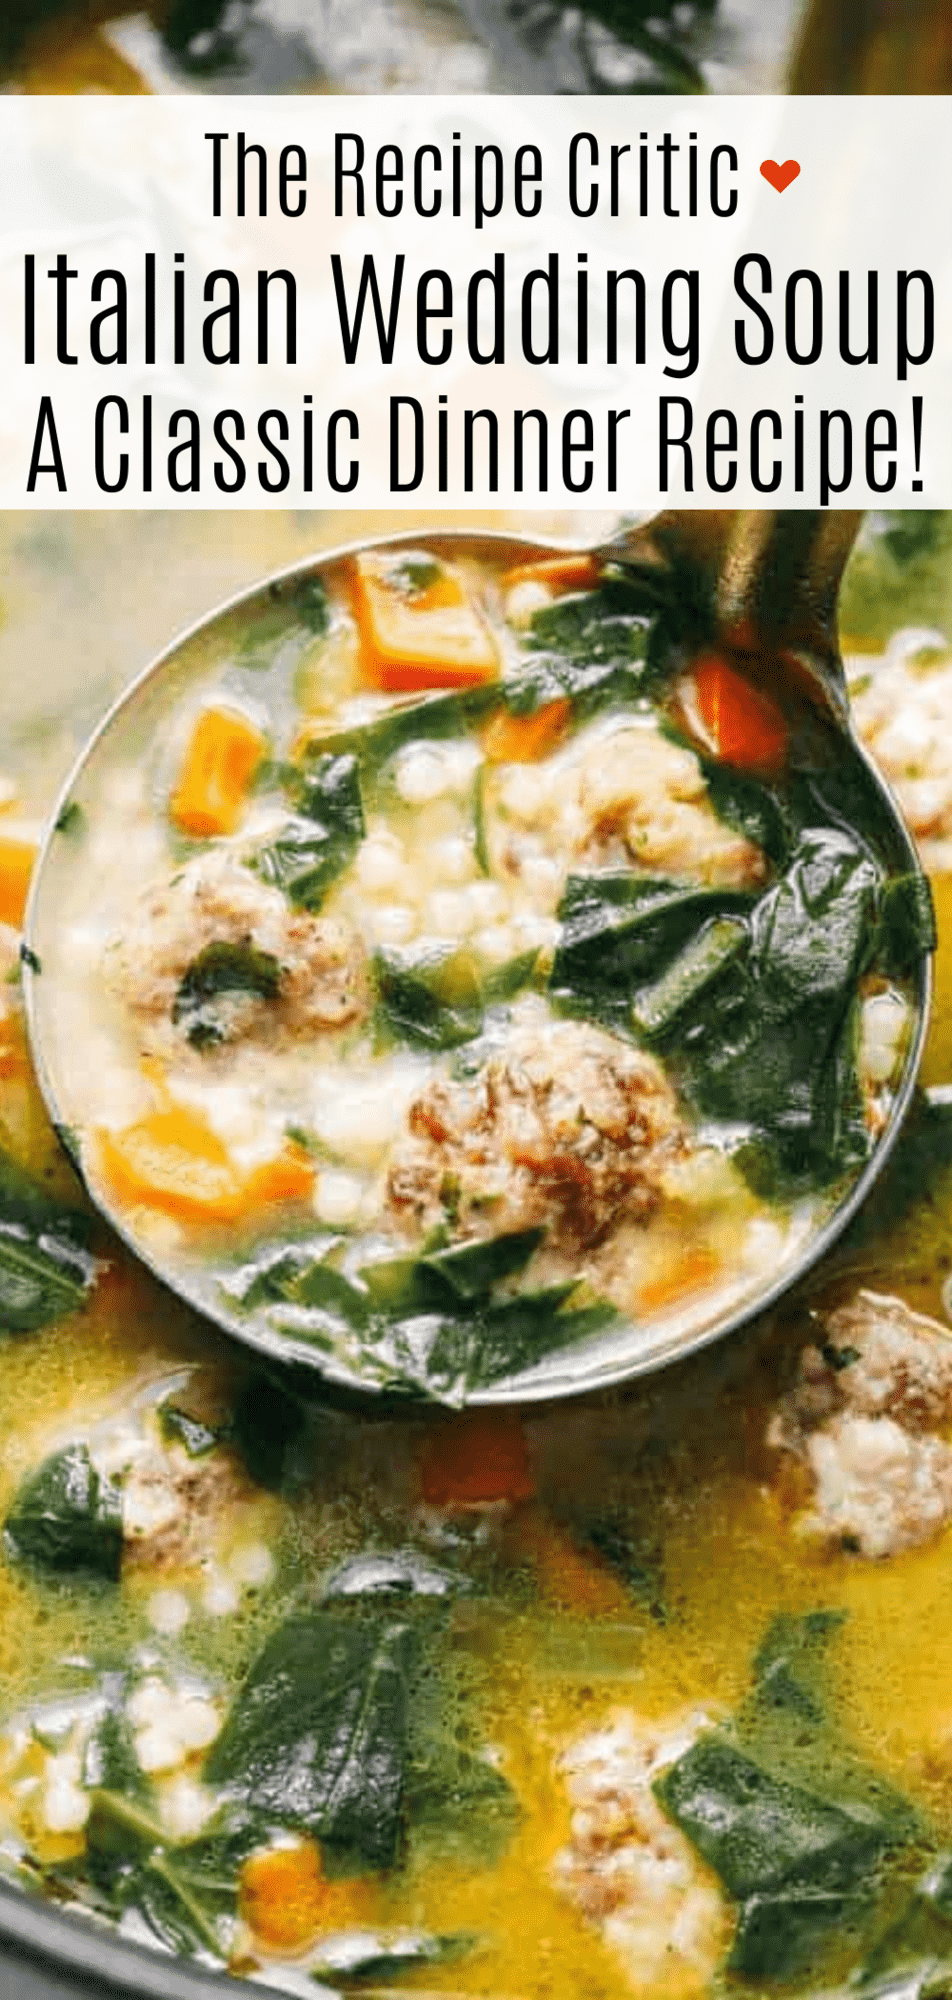 Classic Italian Wedding Soup Recipe - 82